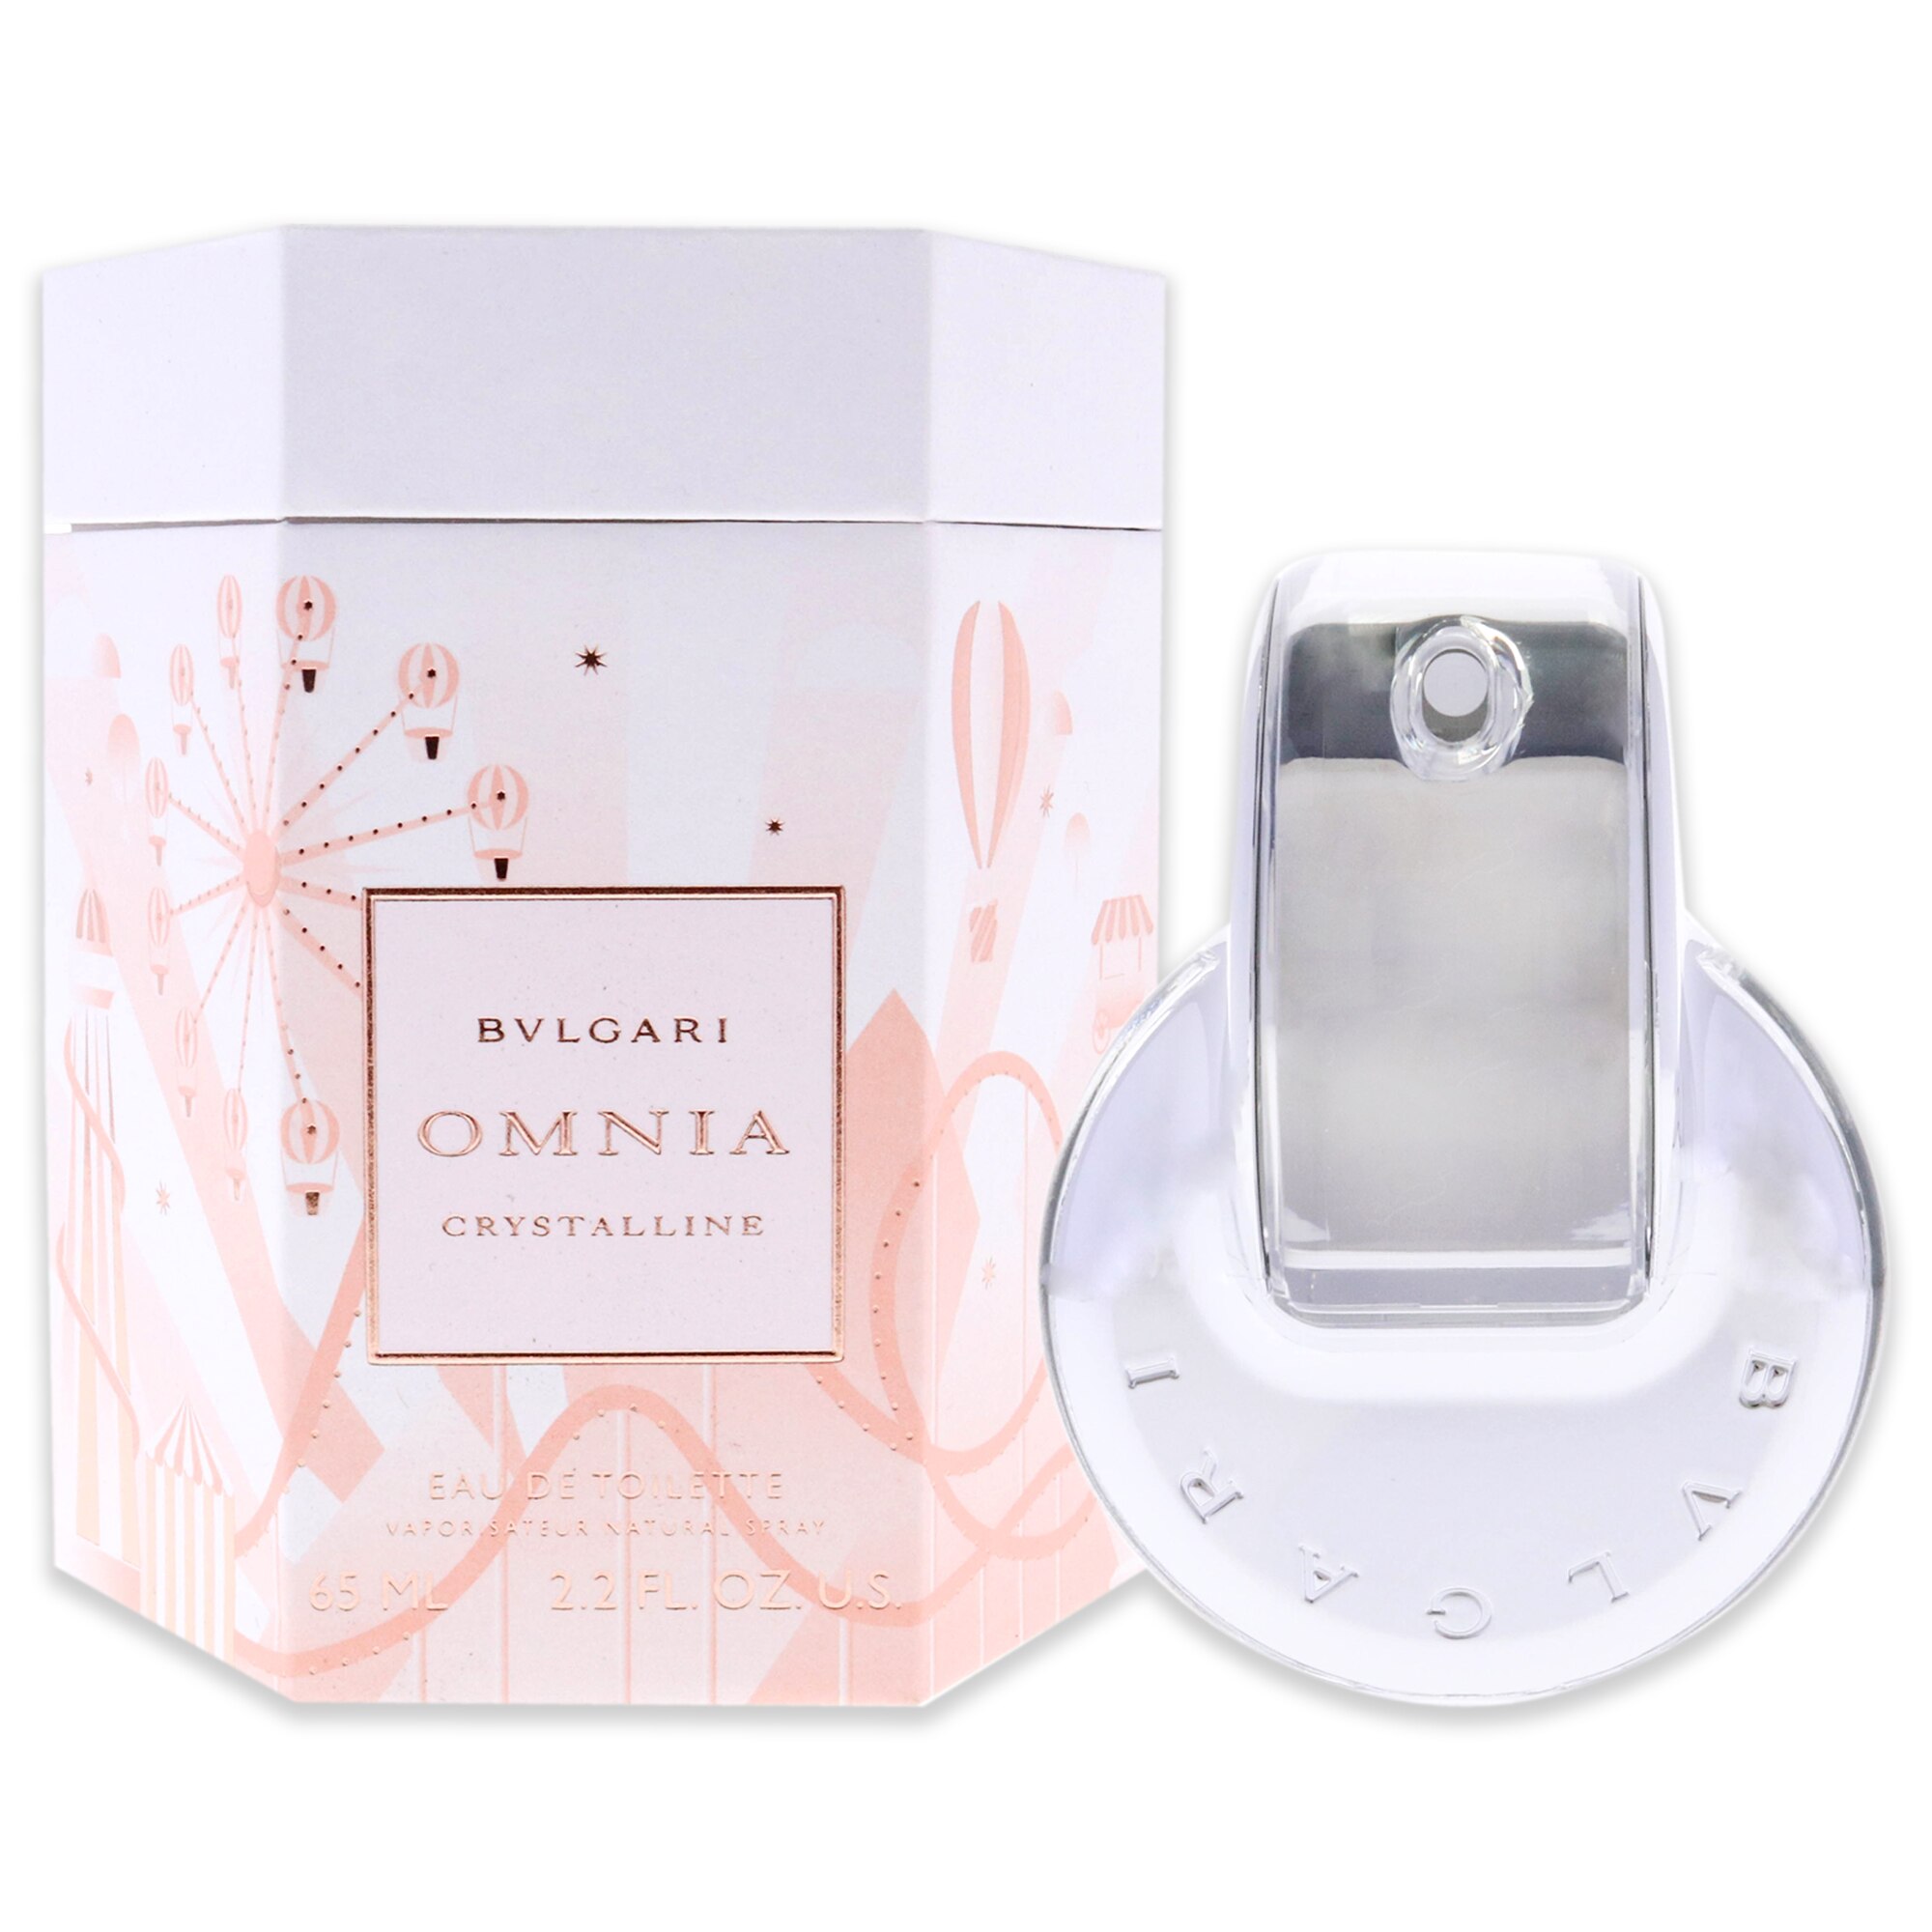 Bvlgari Omnialandia Crystalline by Bvlgari for Women - 2.2 oz EDT Spray (Limited Edition)